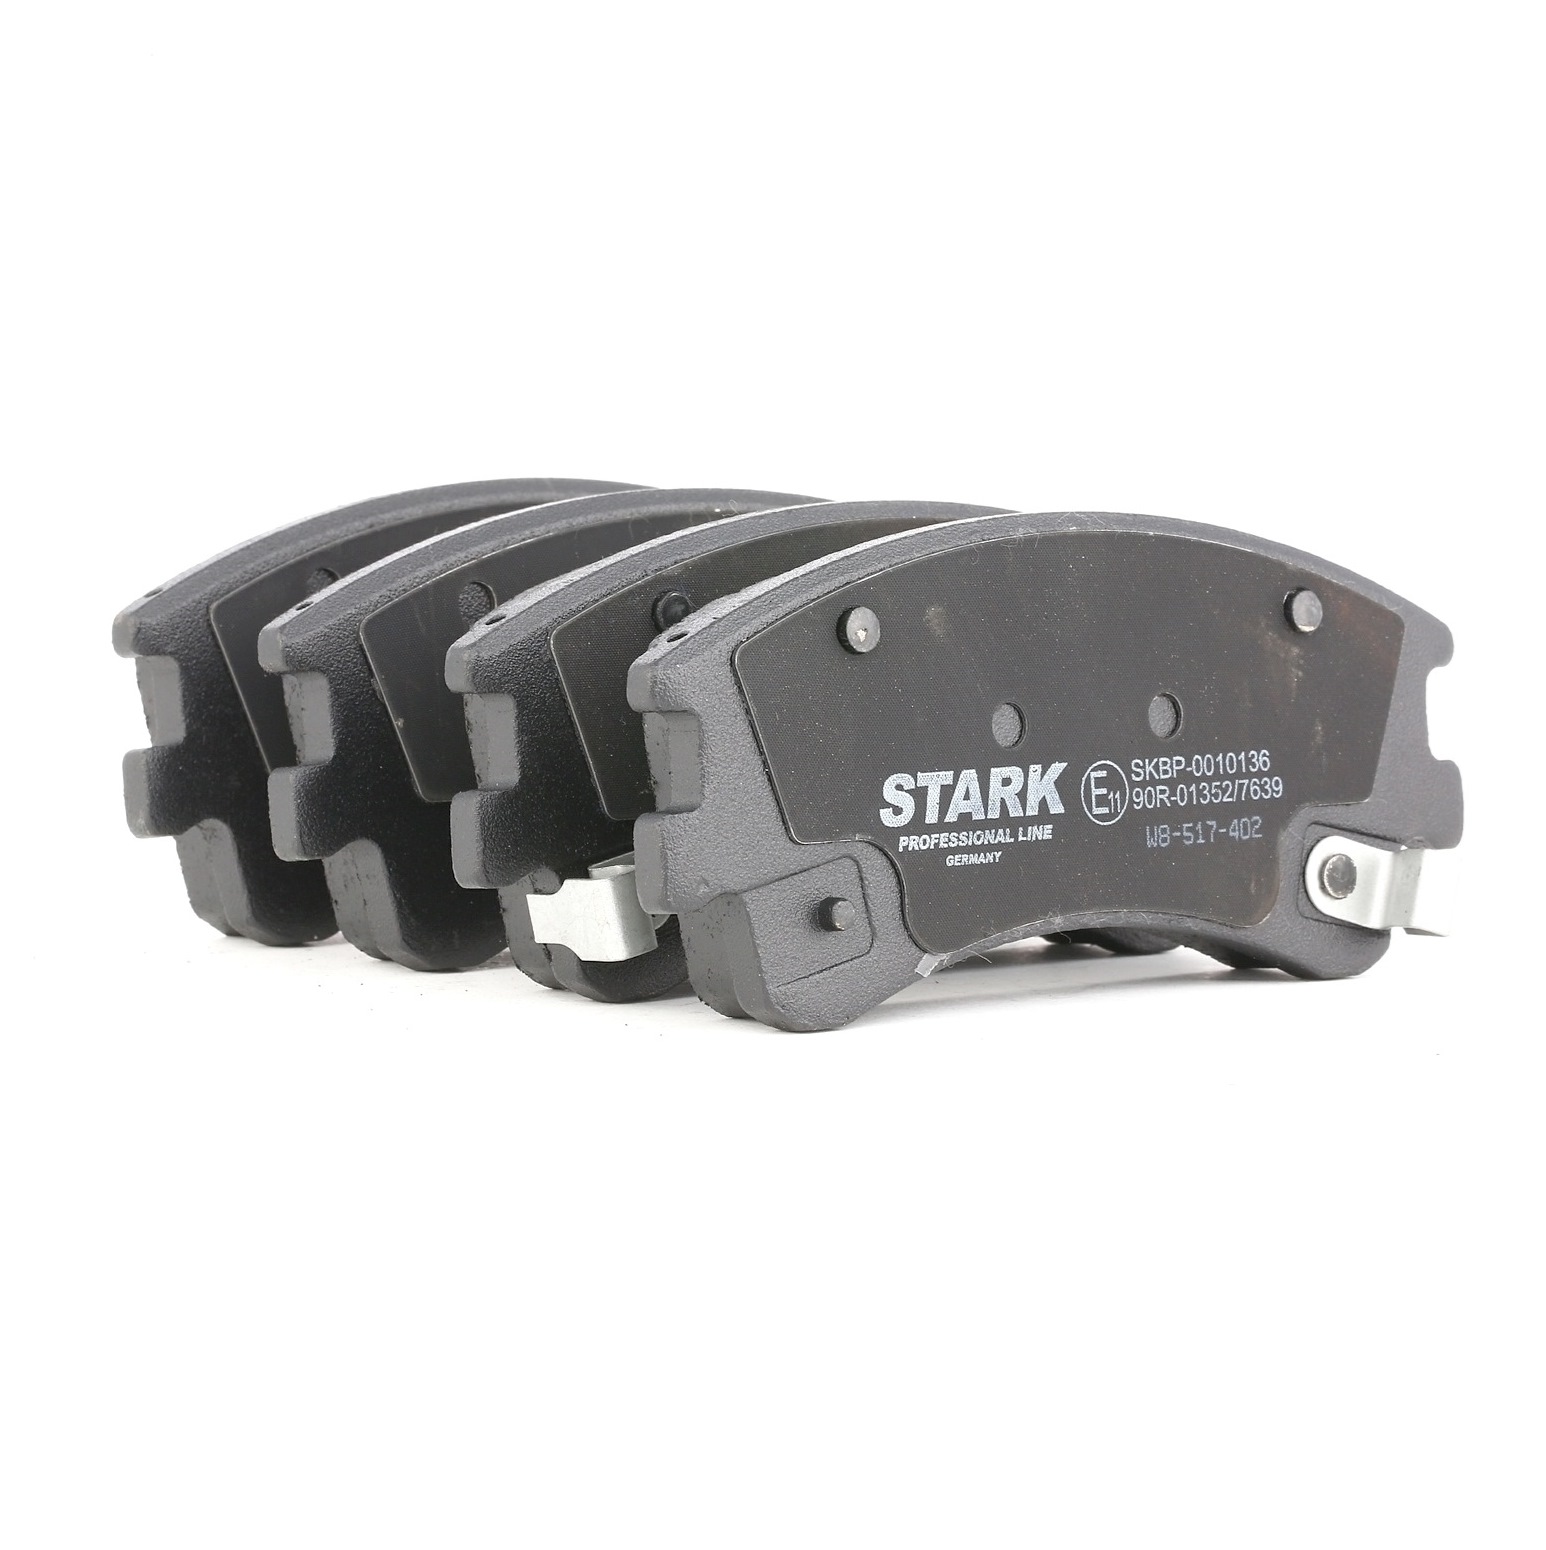 STARK Bremsbelagsatz SKBP-0010136